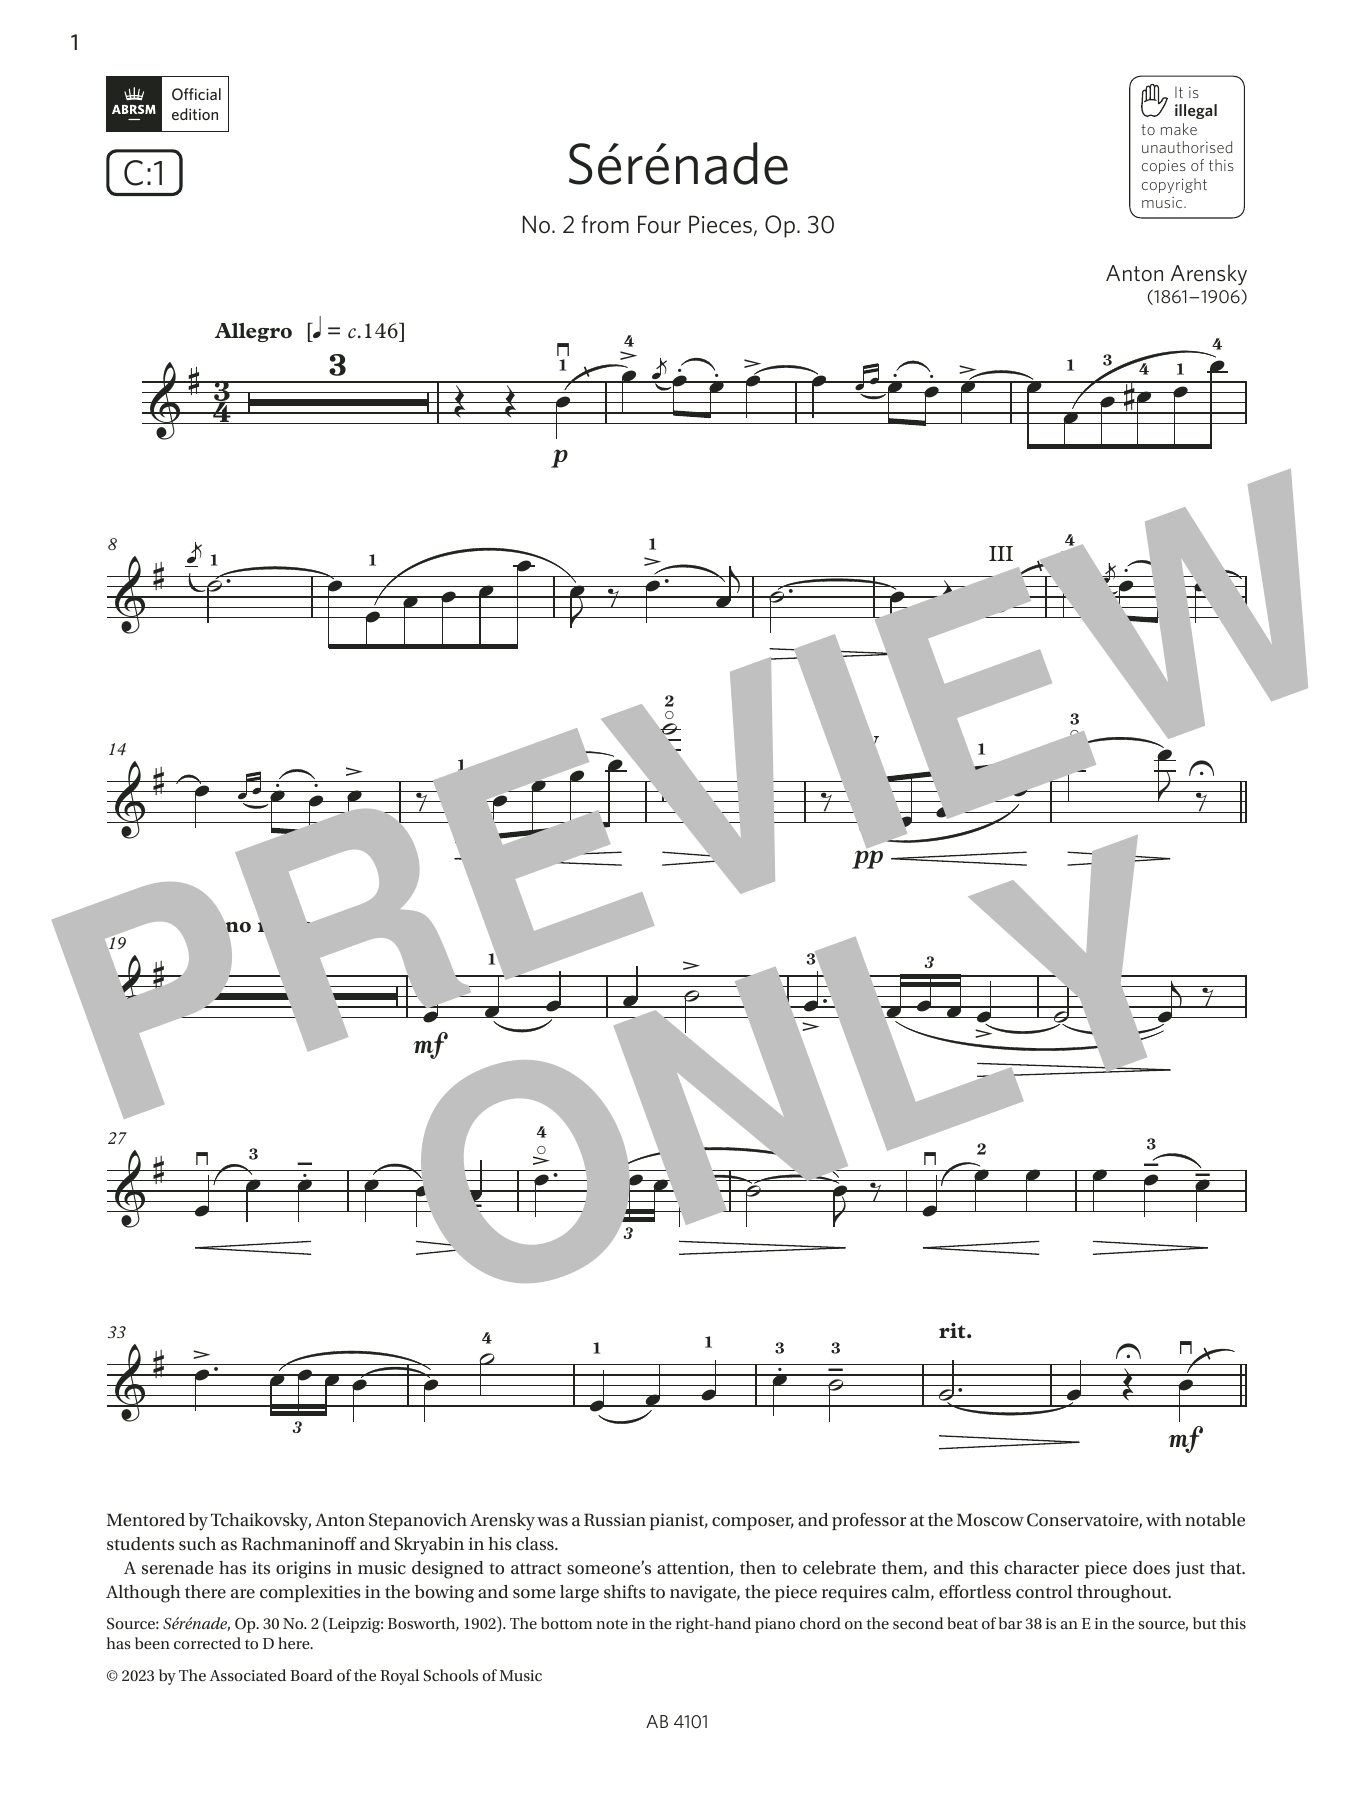 Download Anton Arensky Sérénade (Grade 7, C1, from the ABRSM Sheet Music